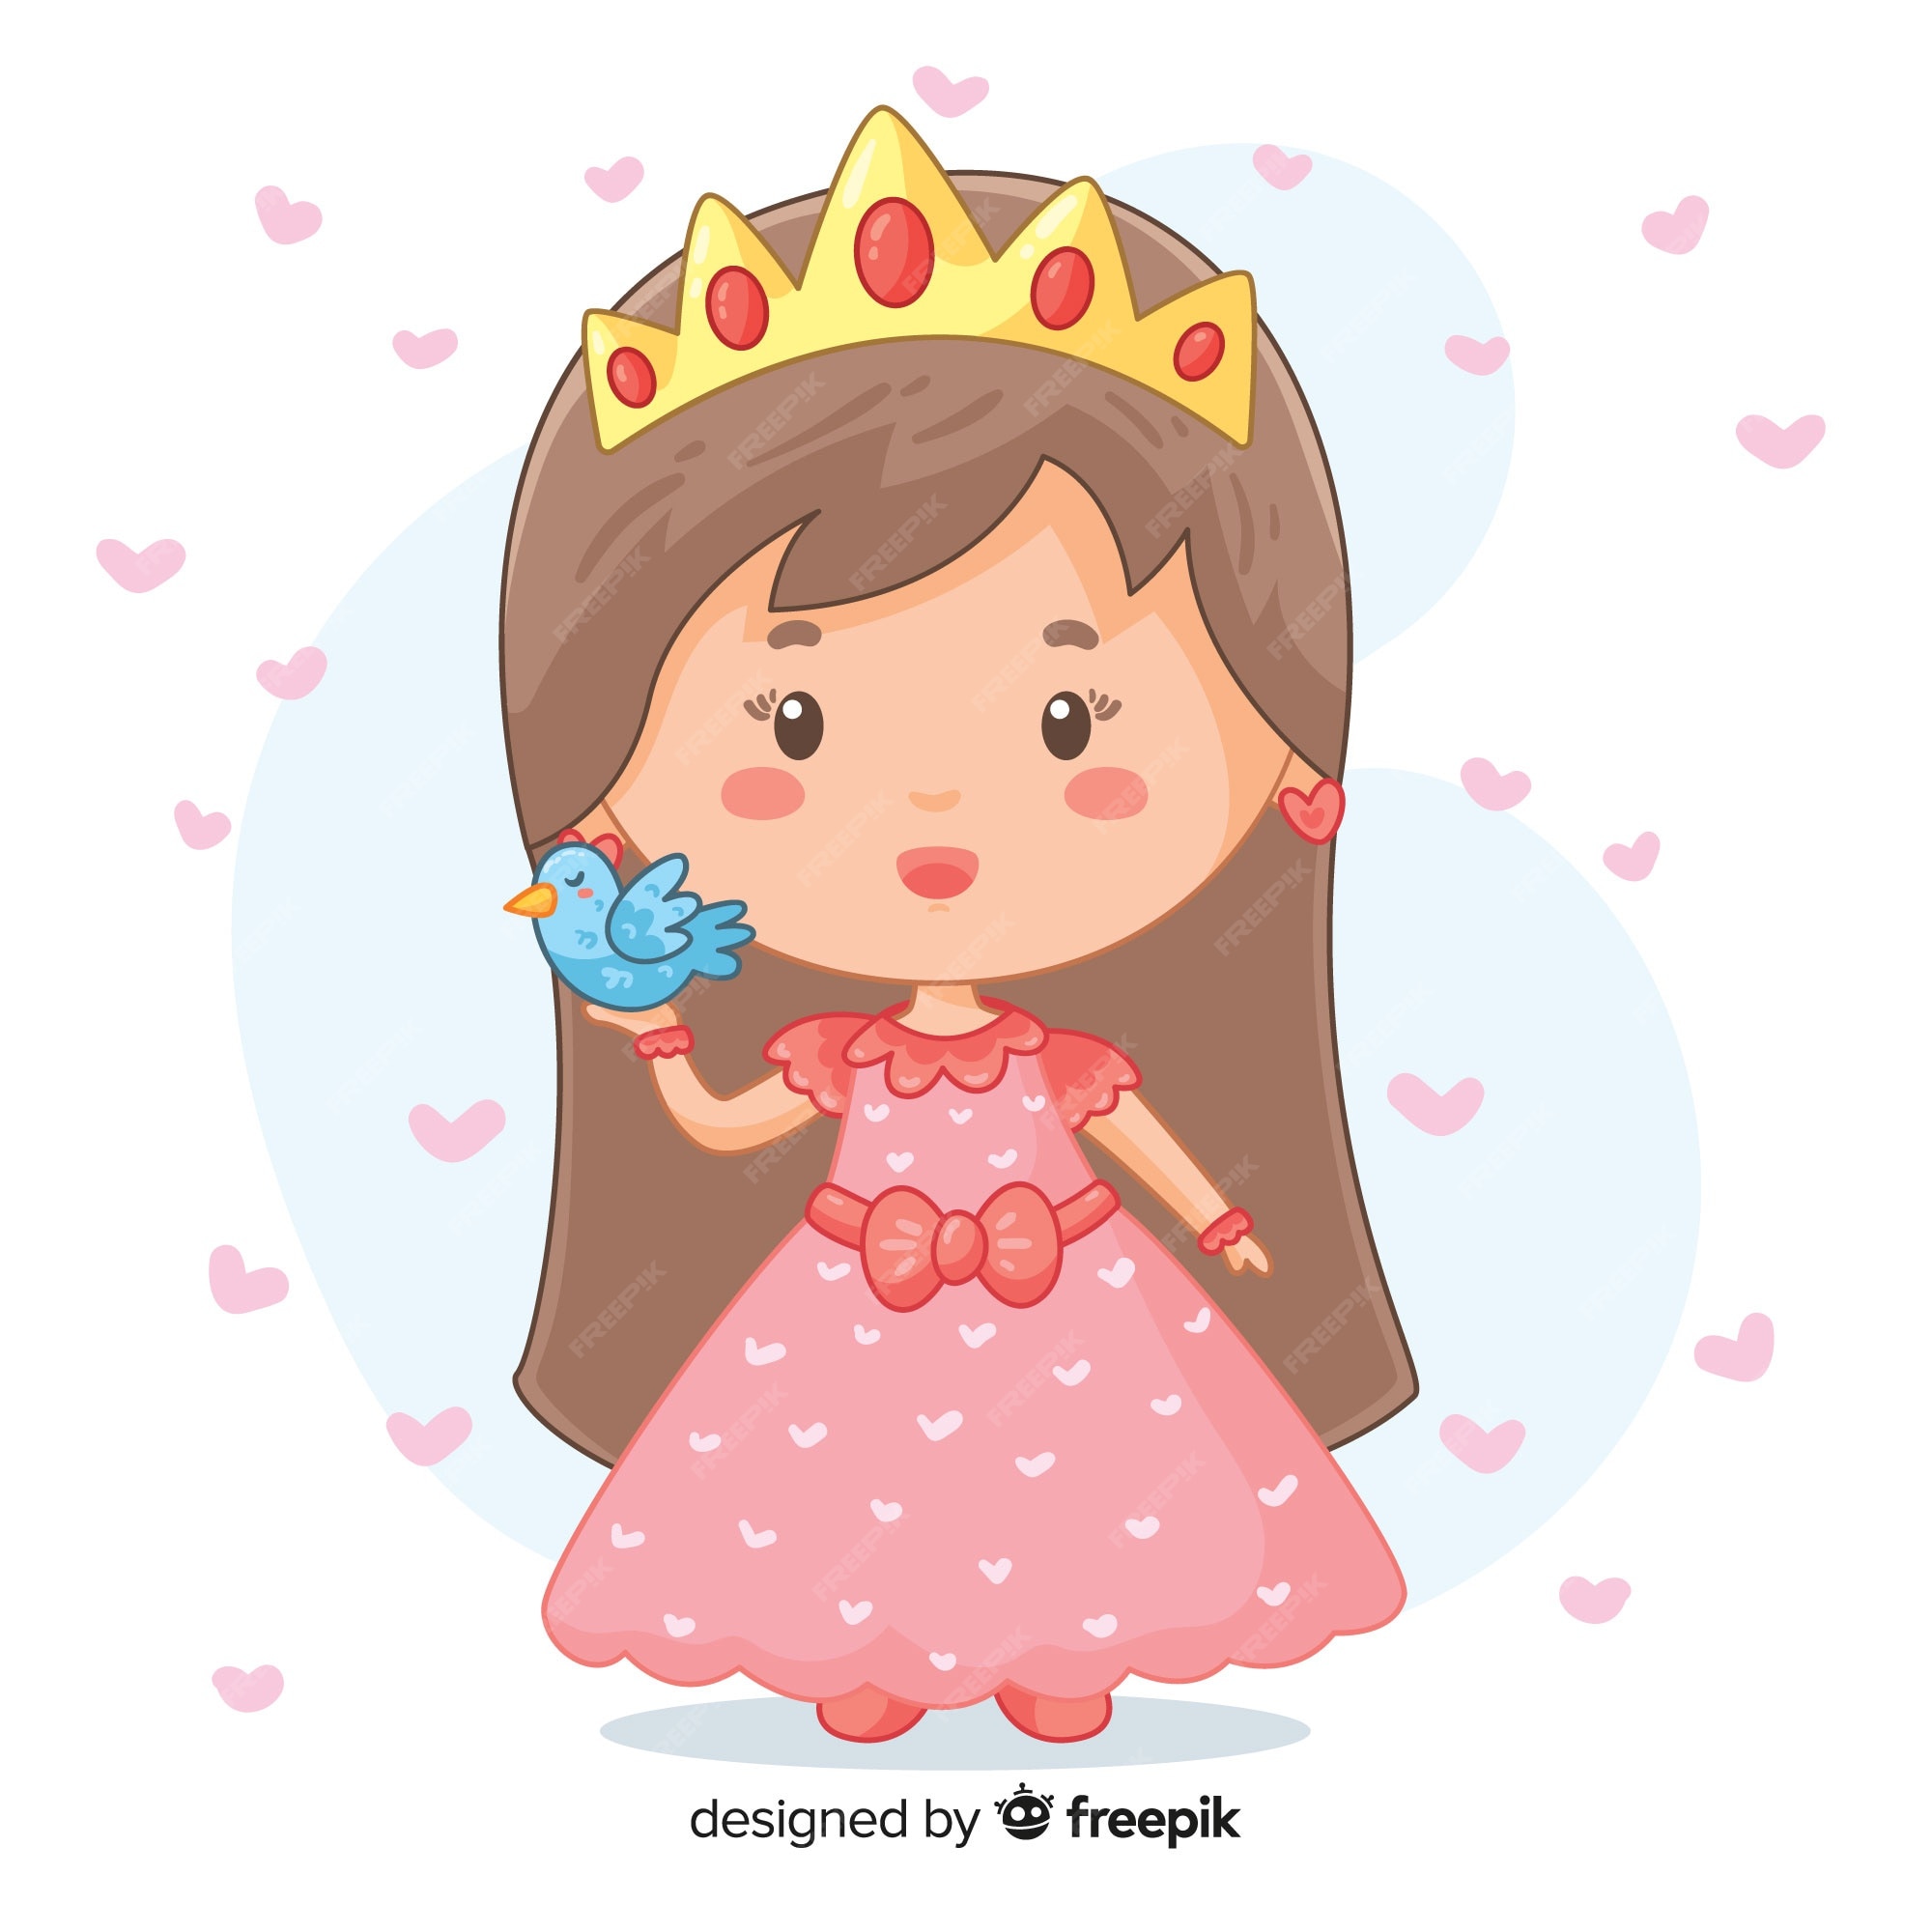 Imágenes de Princesa Dibujo - Descarga gratuita en Freepik